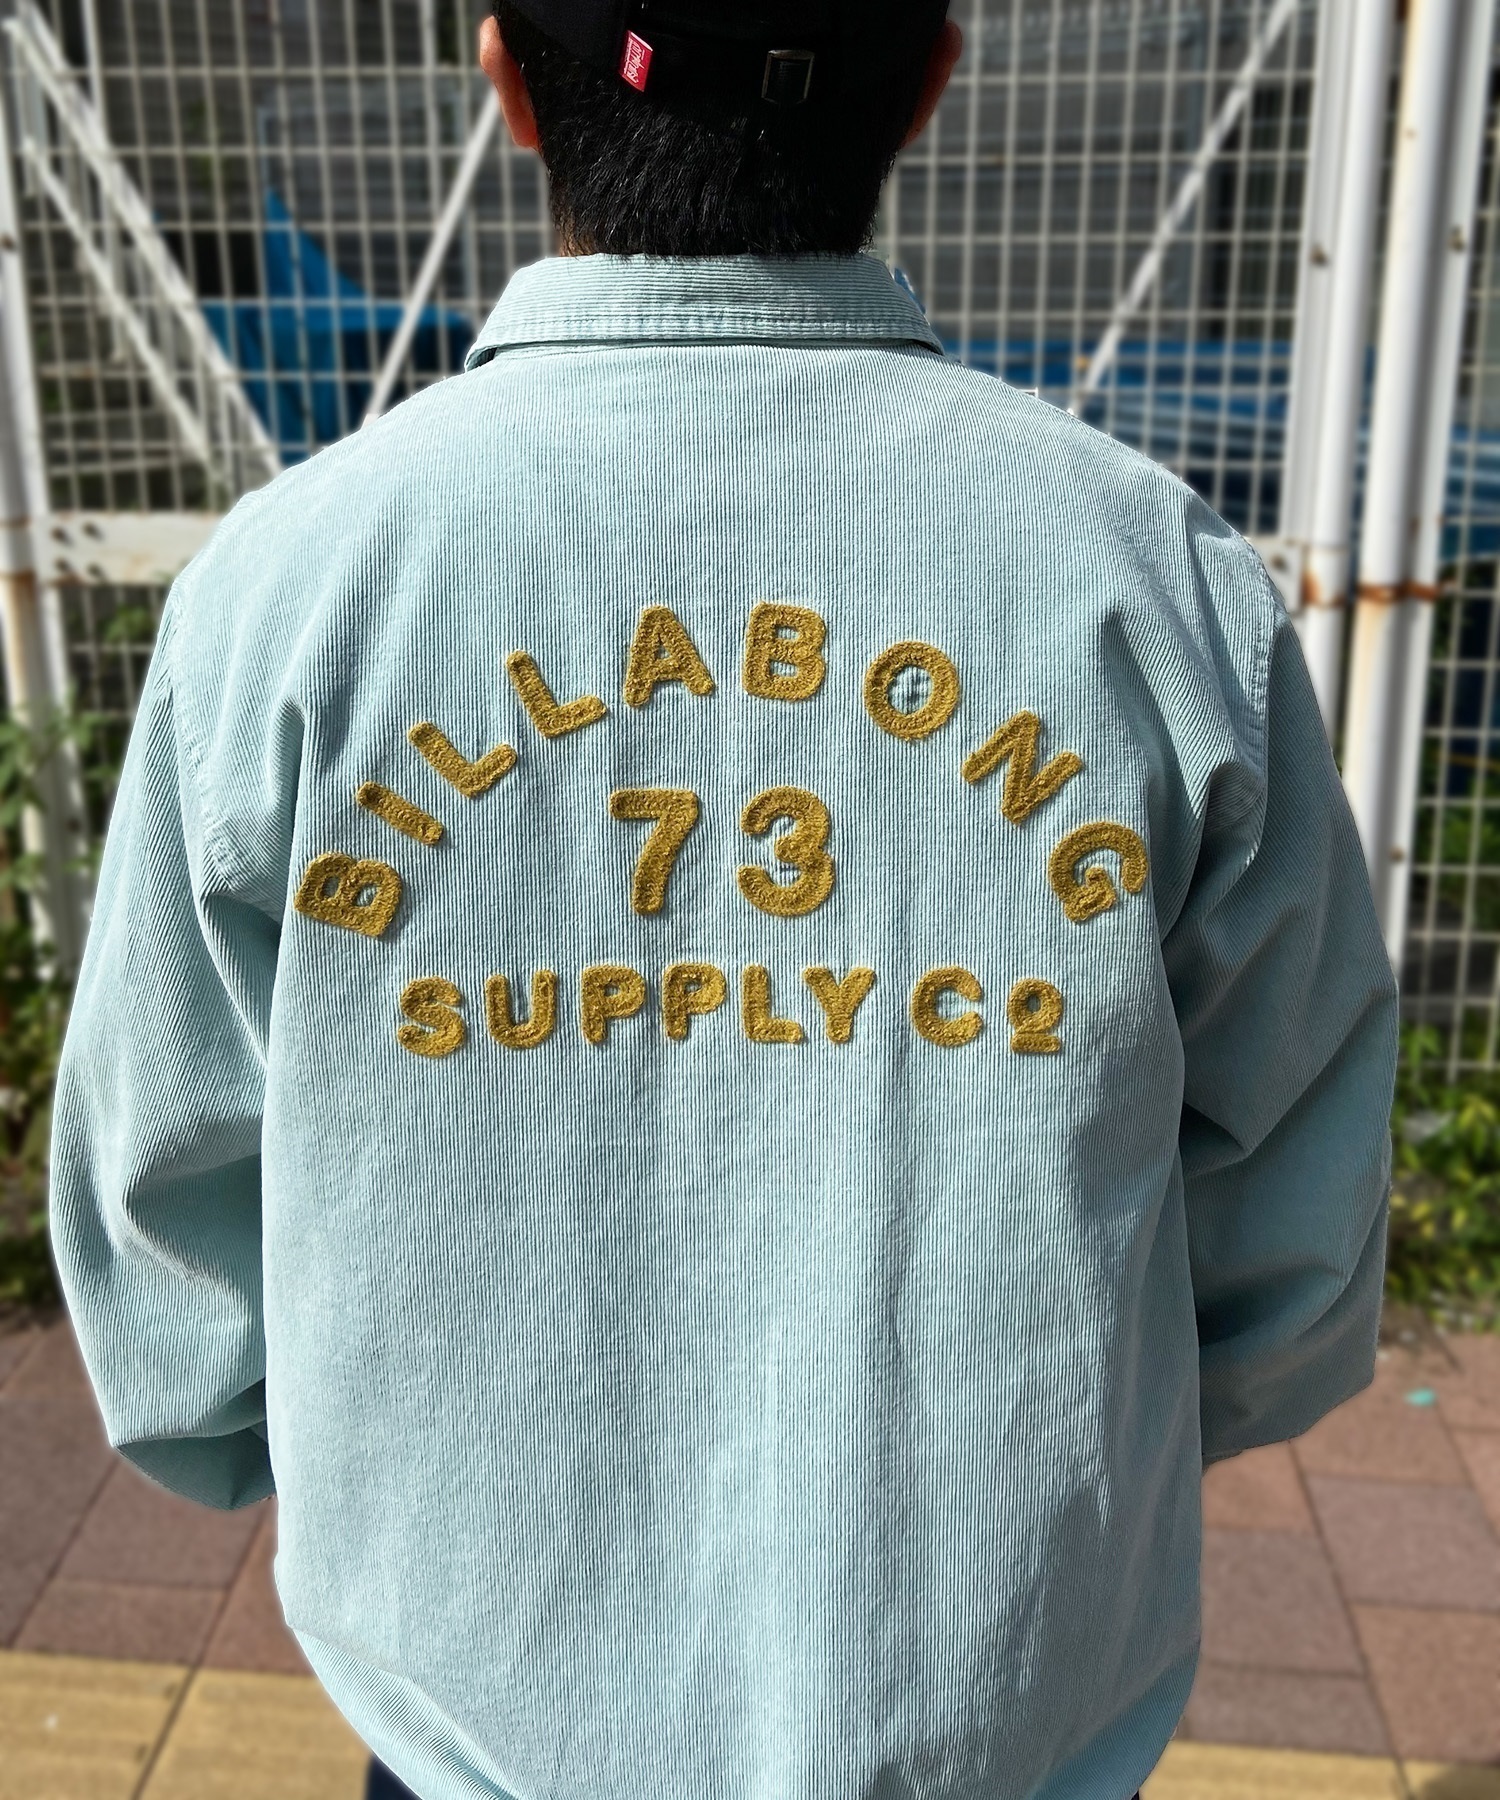 BILLABONG/ビラボン メンズ コーチジャケット コーデュロイ チェーン刺繍 バックロゴ BE011-750(KHA-M)